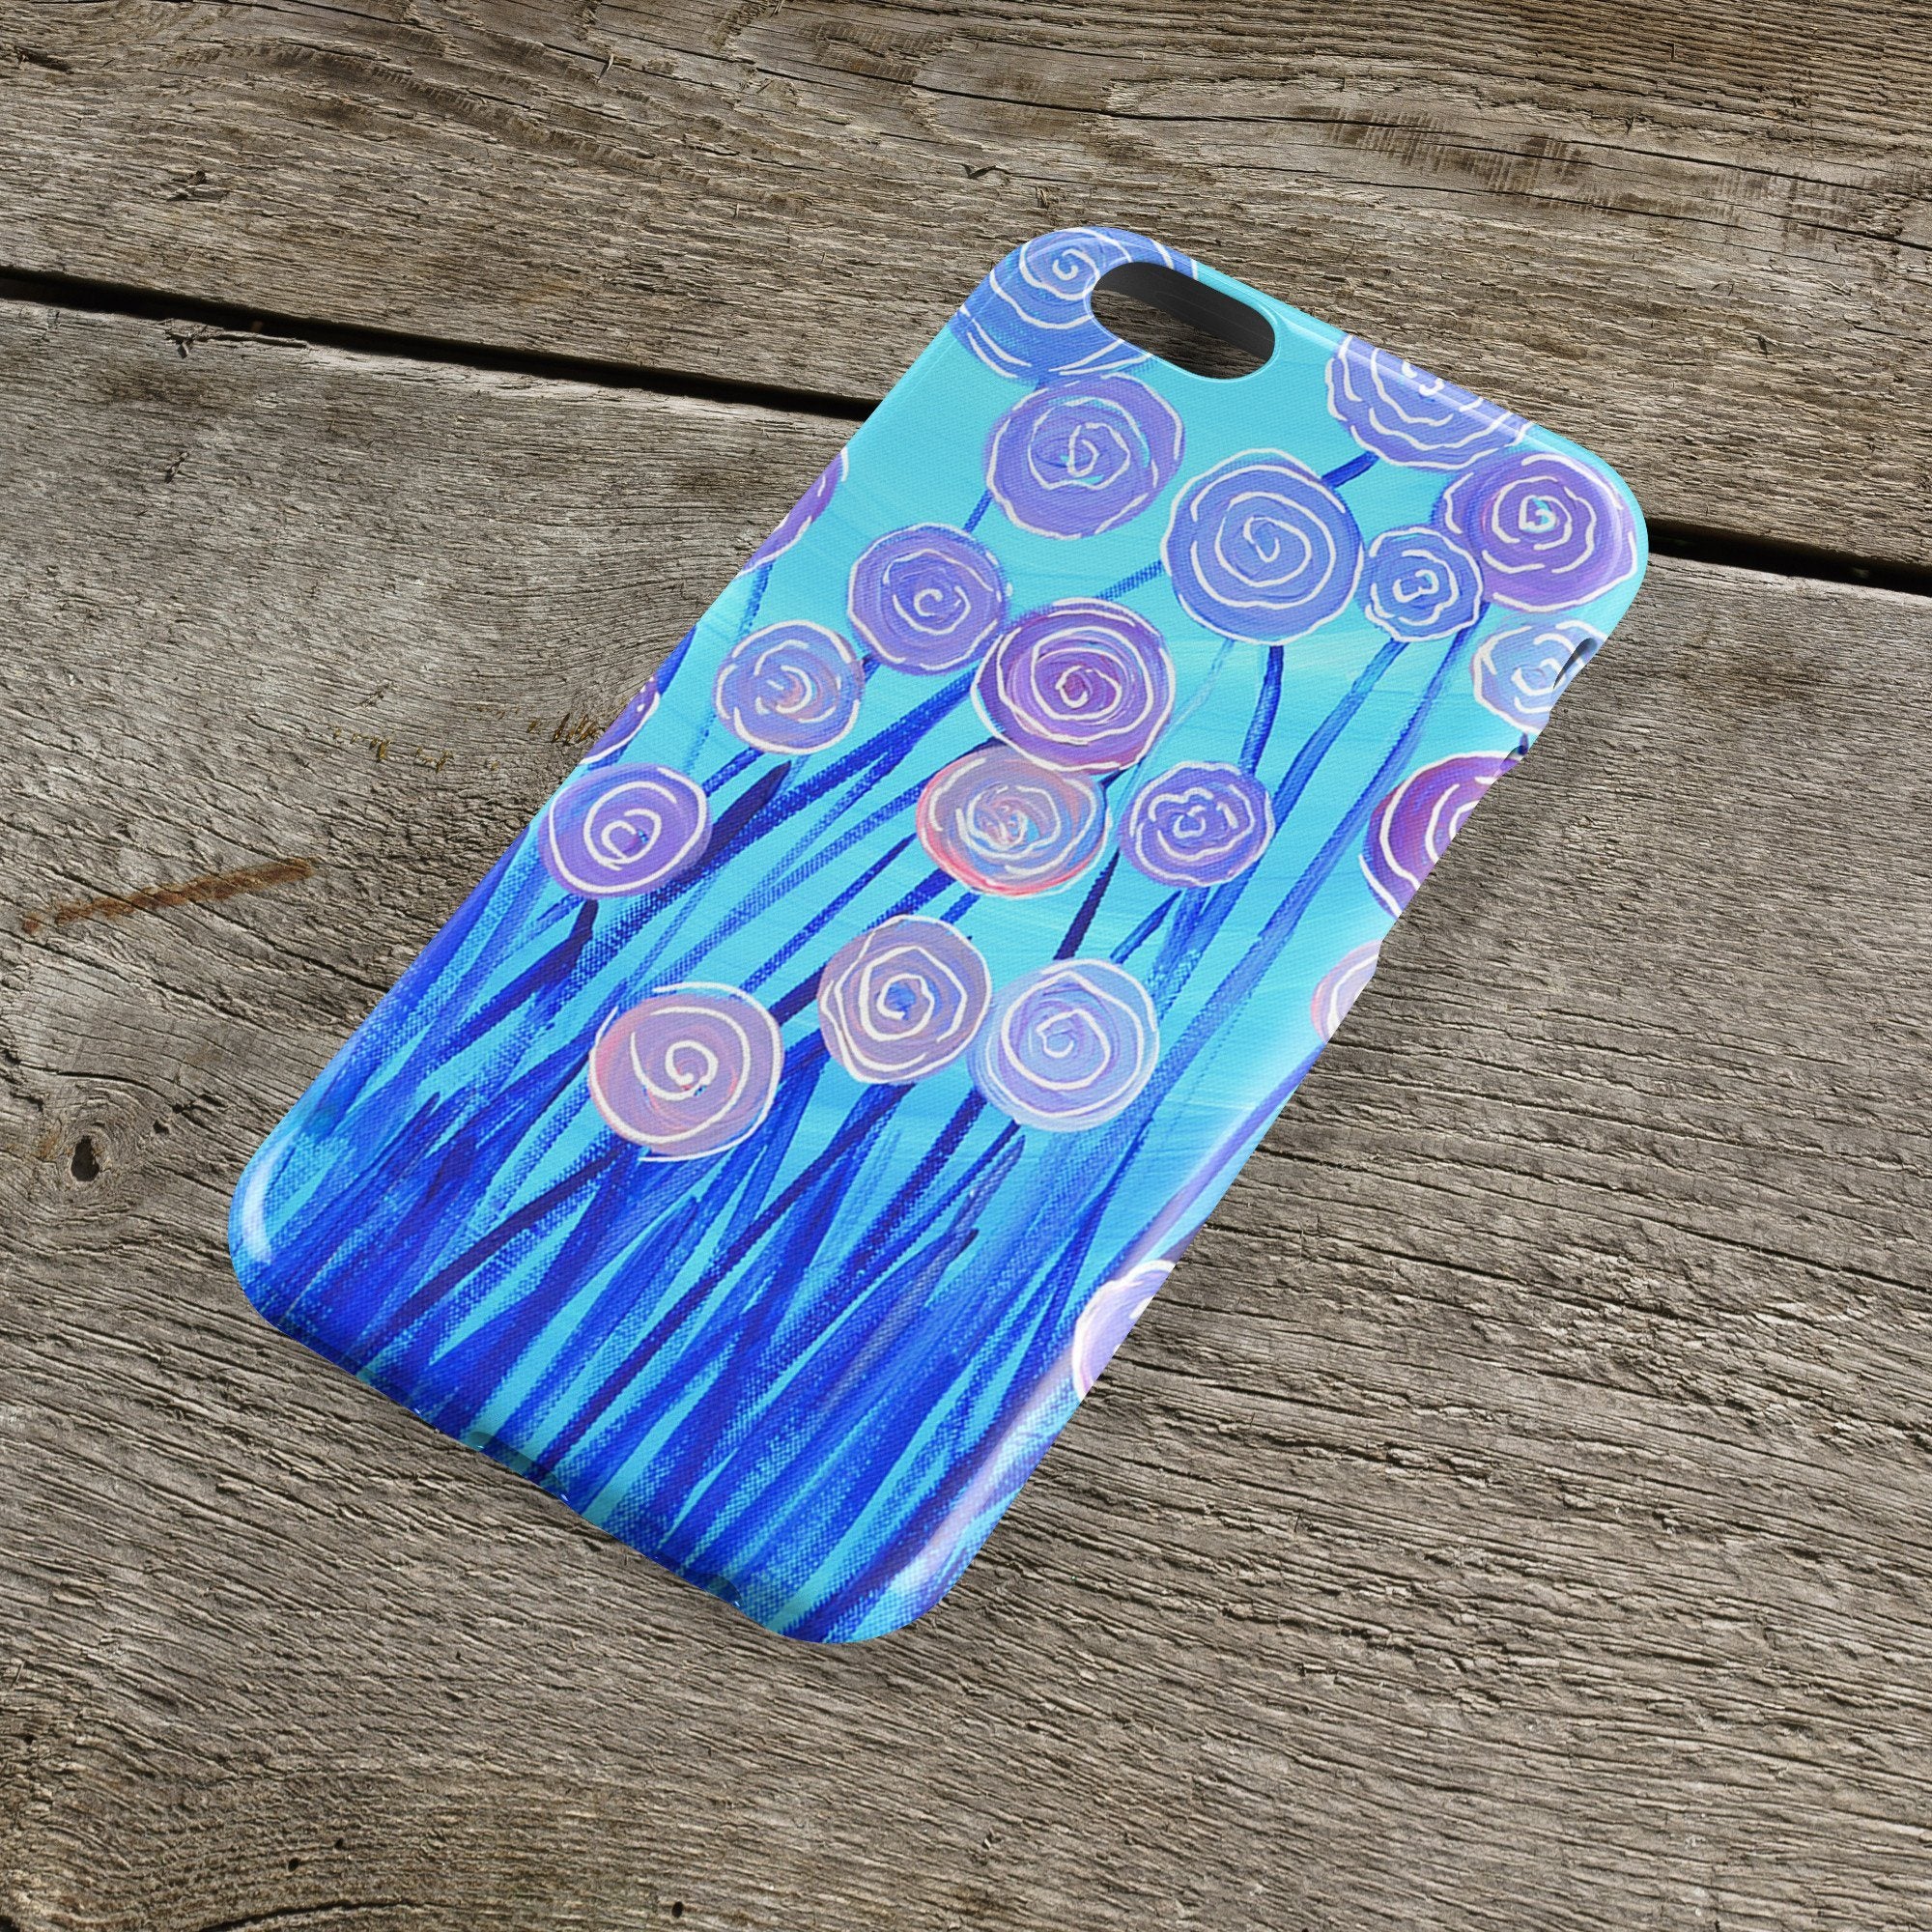 Purple & Blue Flowers iPhone Case - Louise Mead